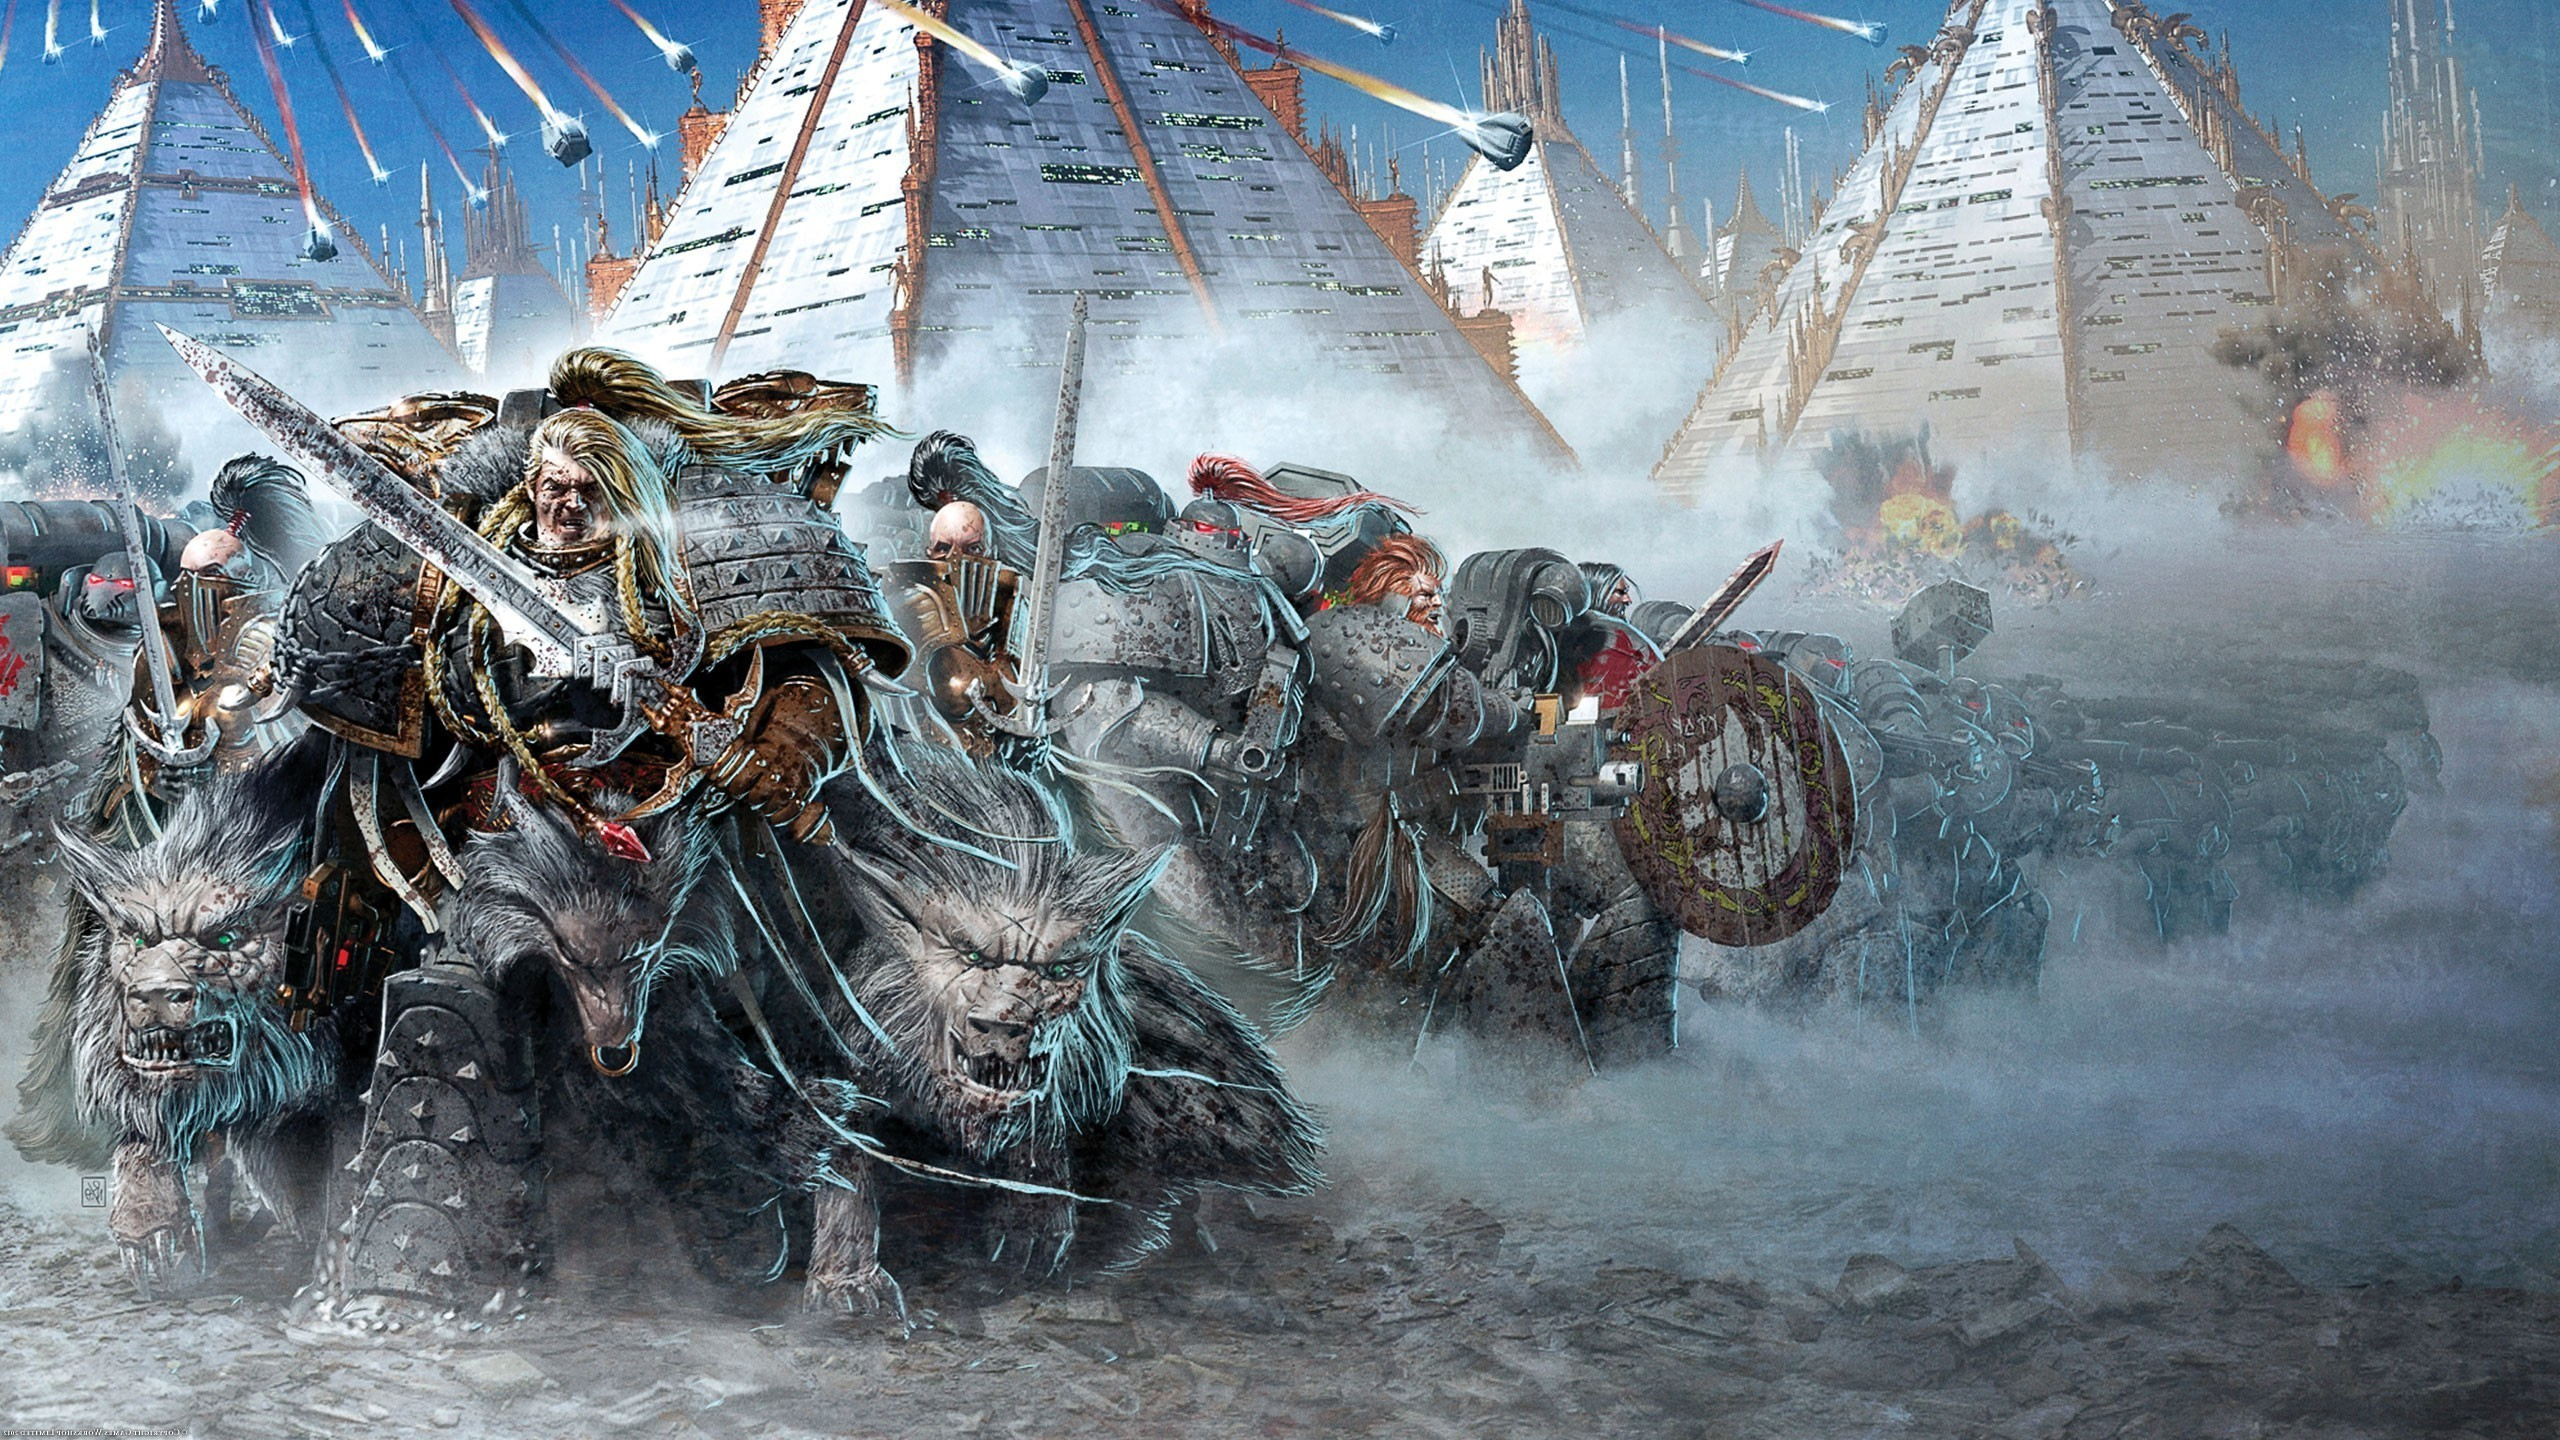 fond d'écran warhammer 40k,oeuvre de cg,mythologie,art,viking,personnage fictif